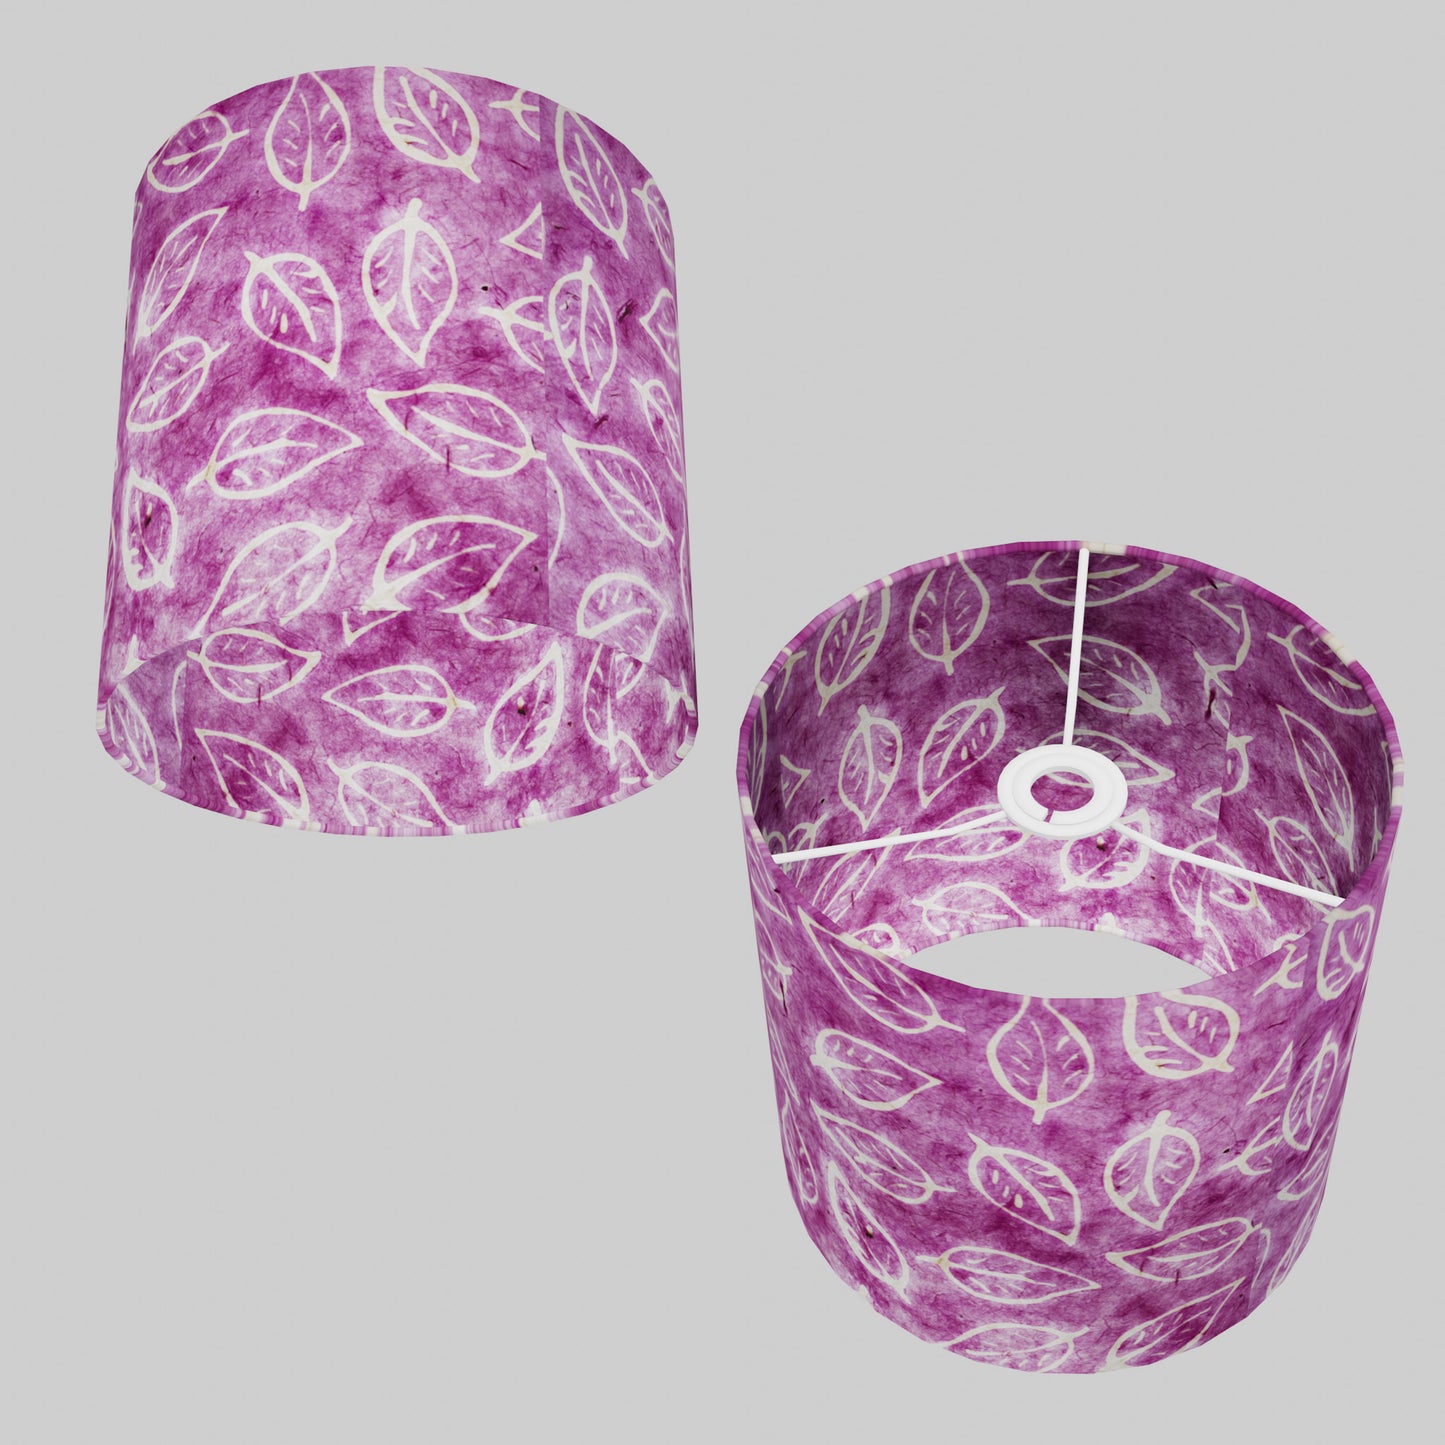 Drum Lamp Shade - P68 - Batik Leaf on Purple, 25cm x 25cm